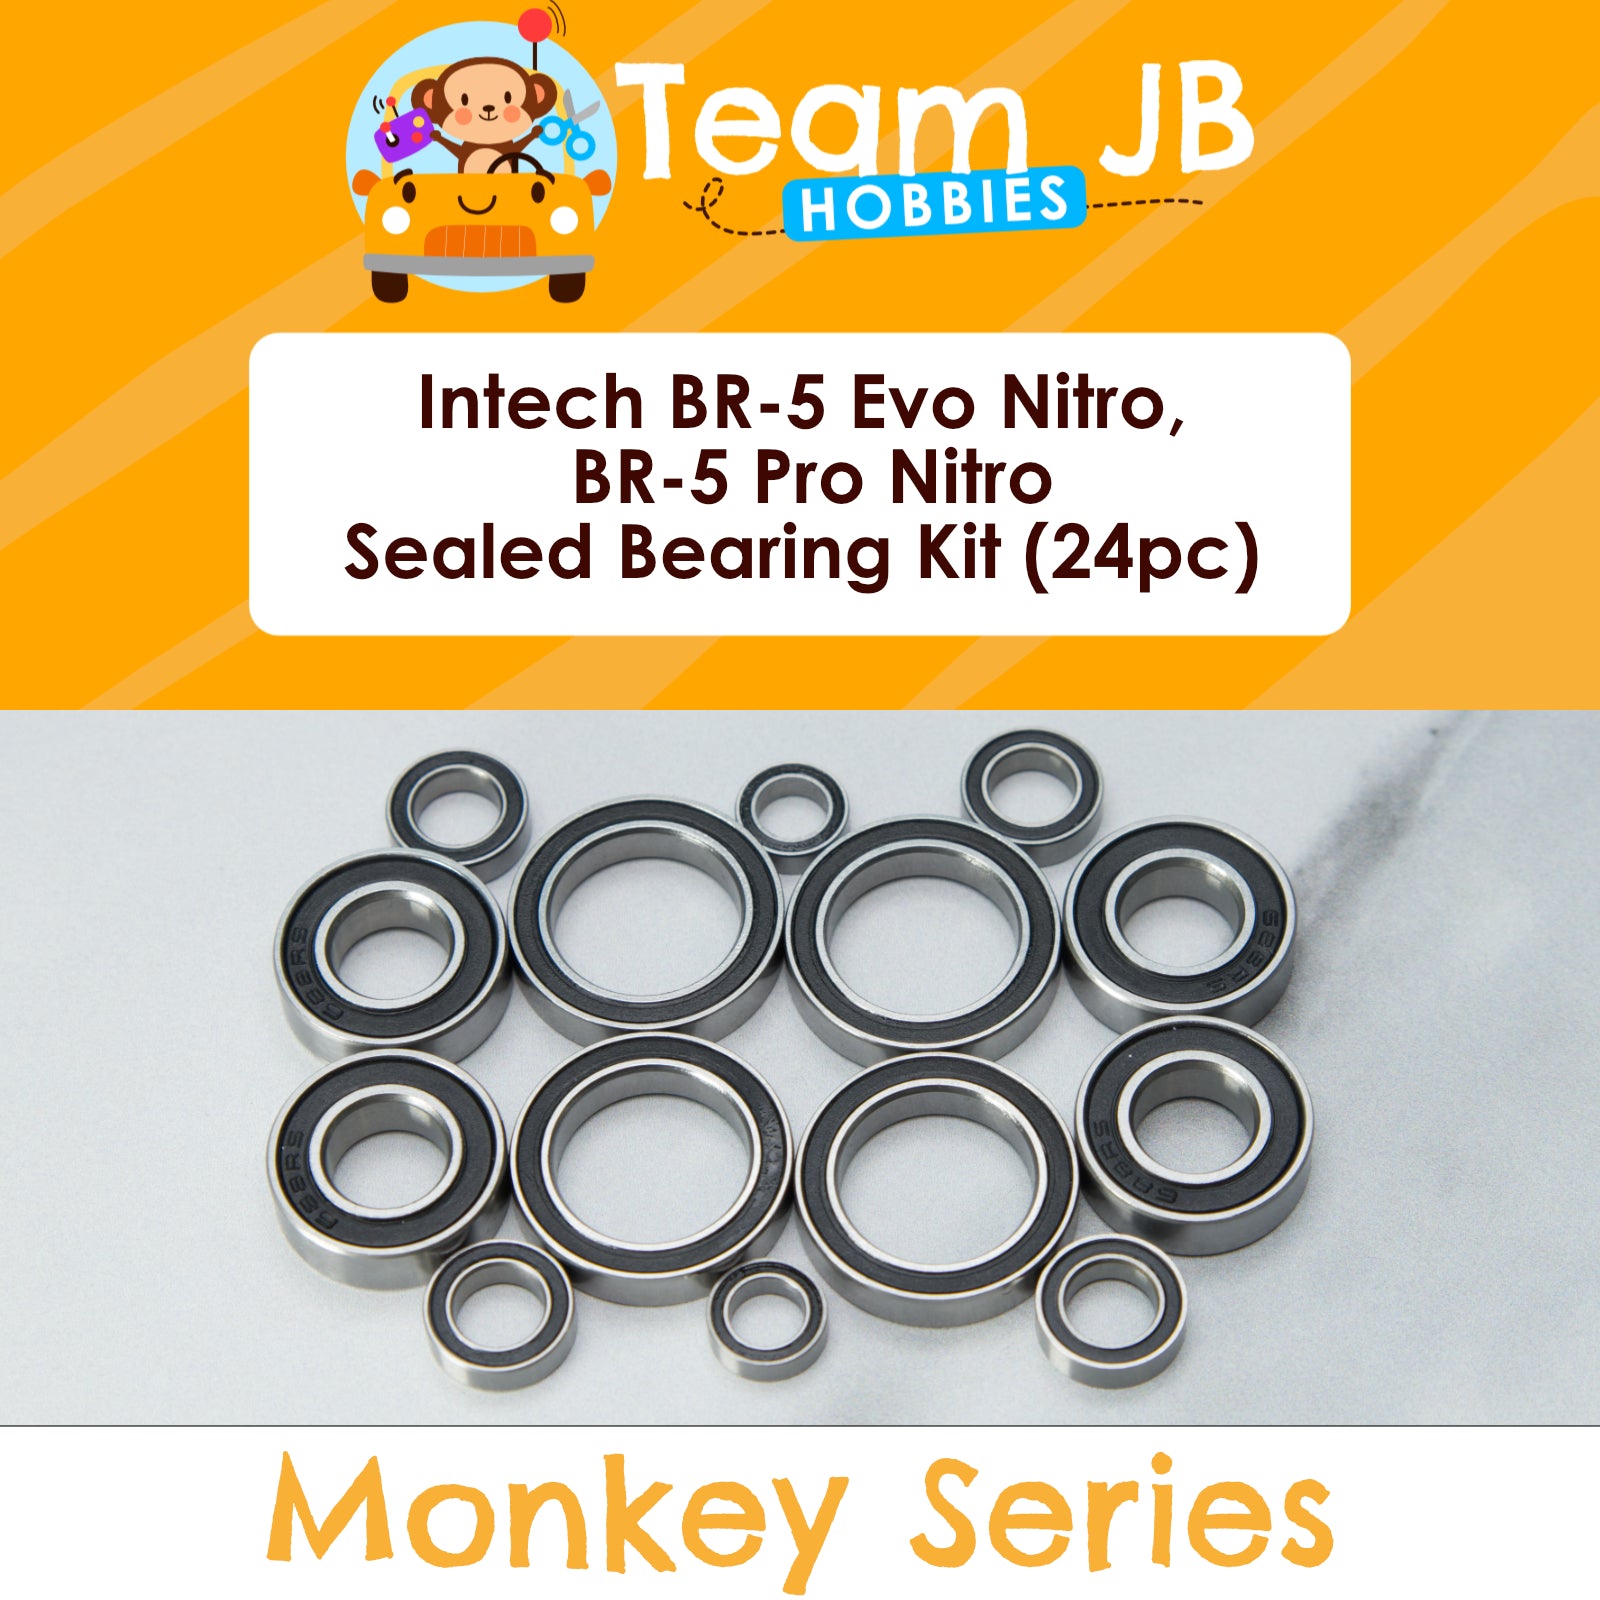 Intech BR-5 Evo Nitro, BR-5 Pro Nitro - Sealed Bearing Kit